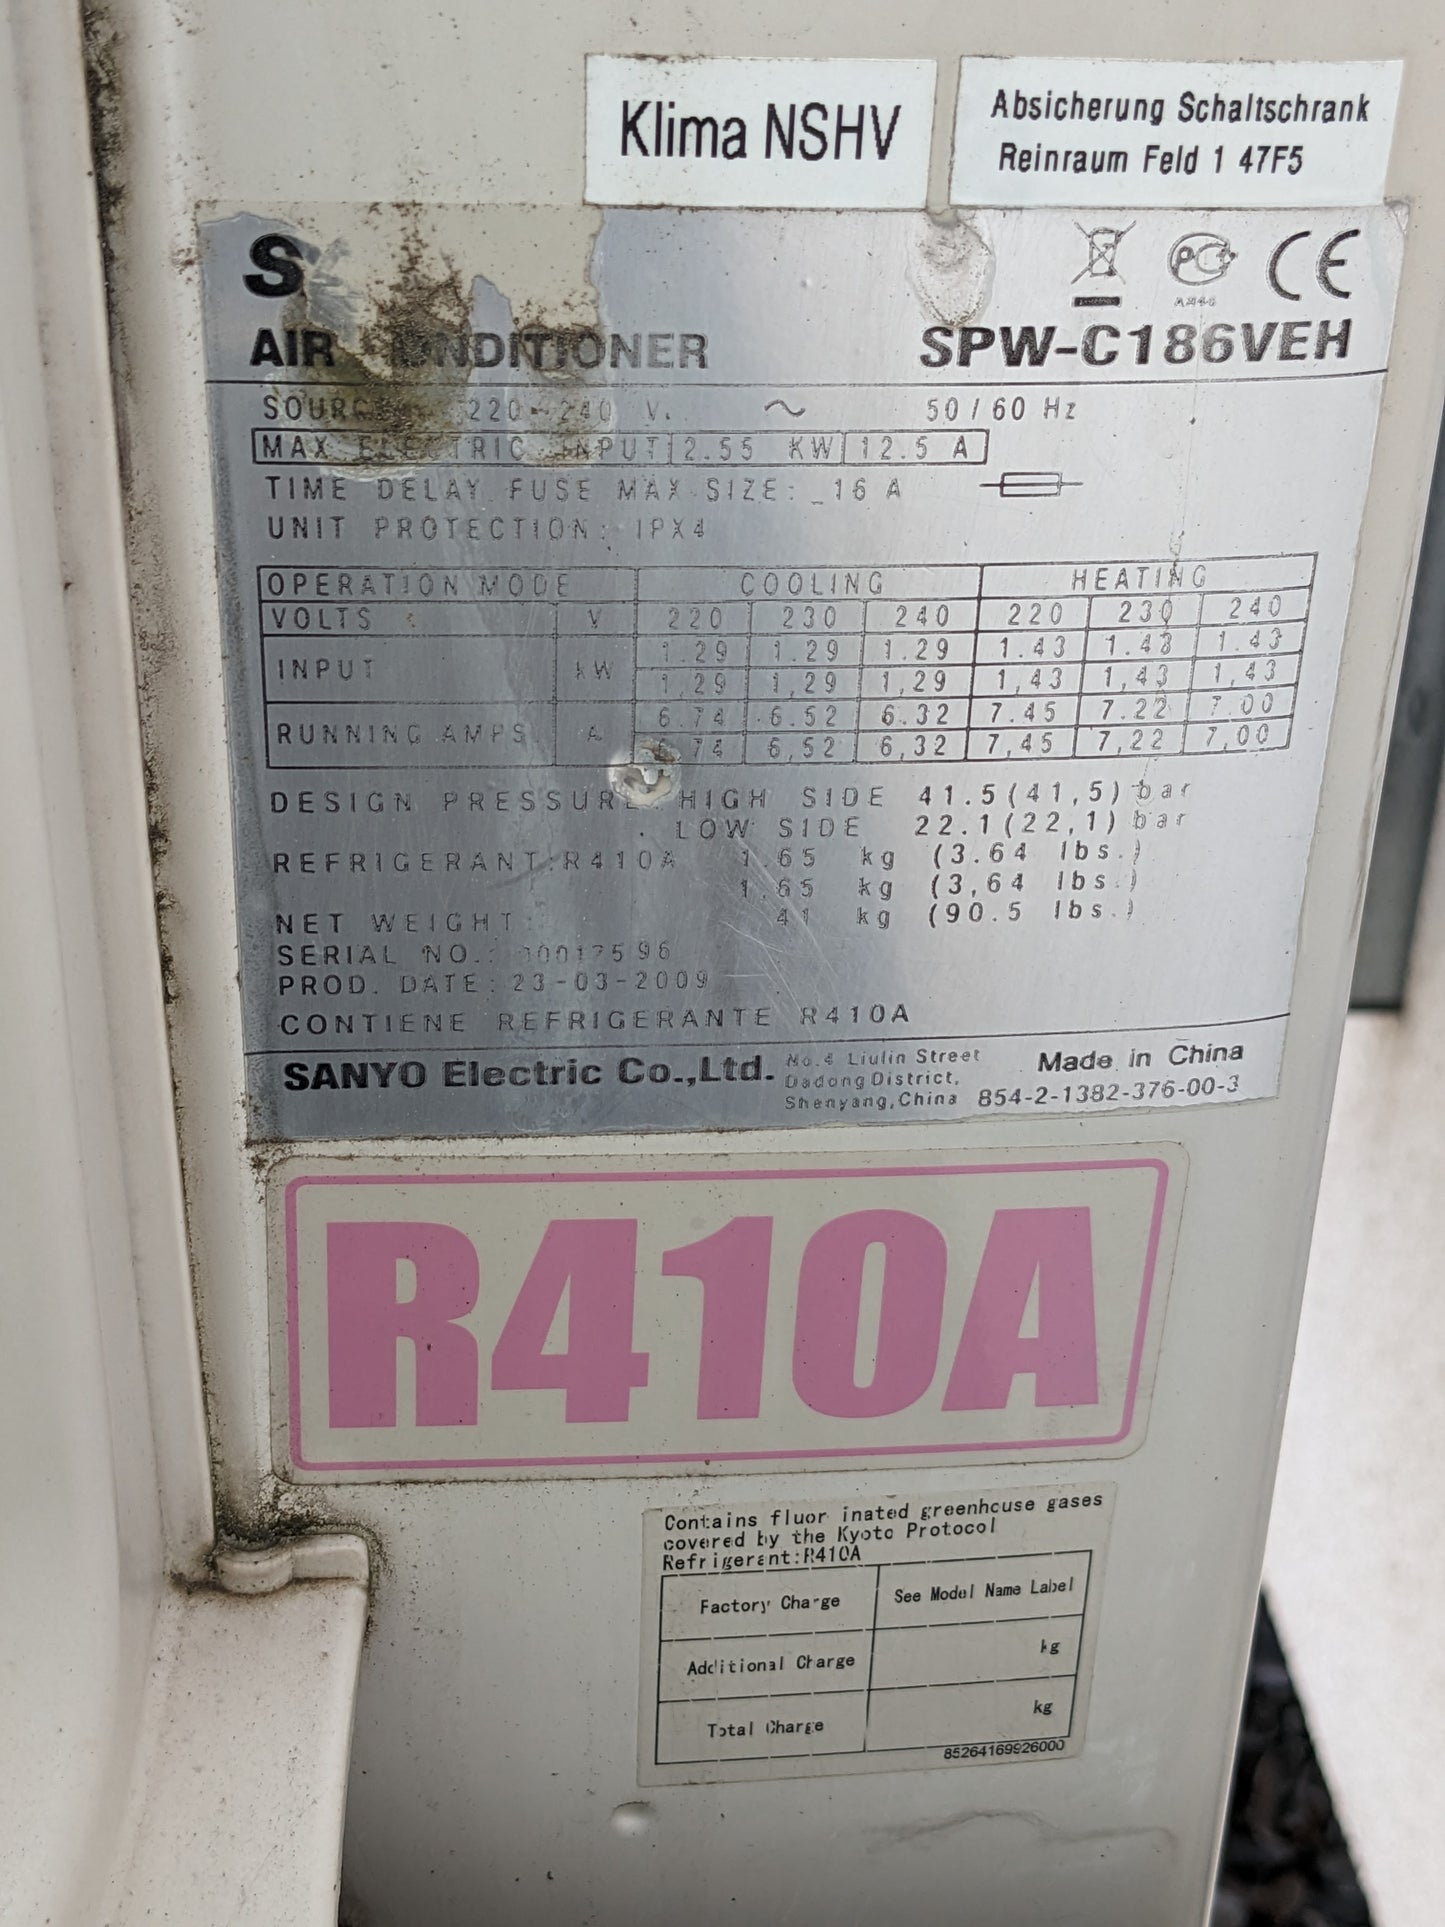 Umluftkühlanlage Sanyo SPW-C186VEH 790x570x310